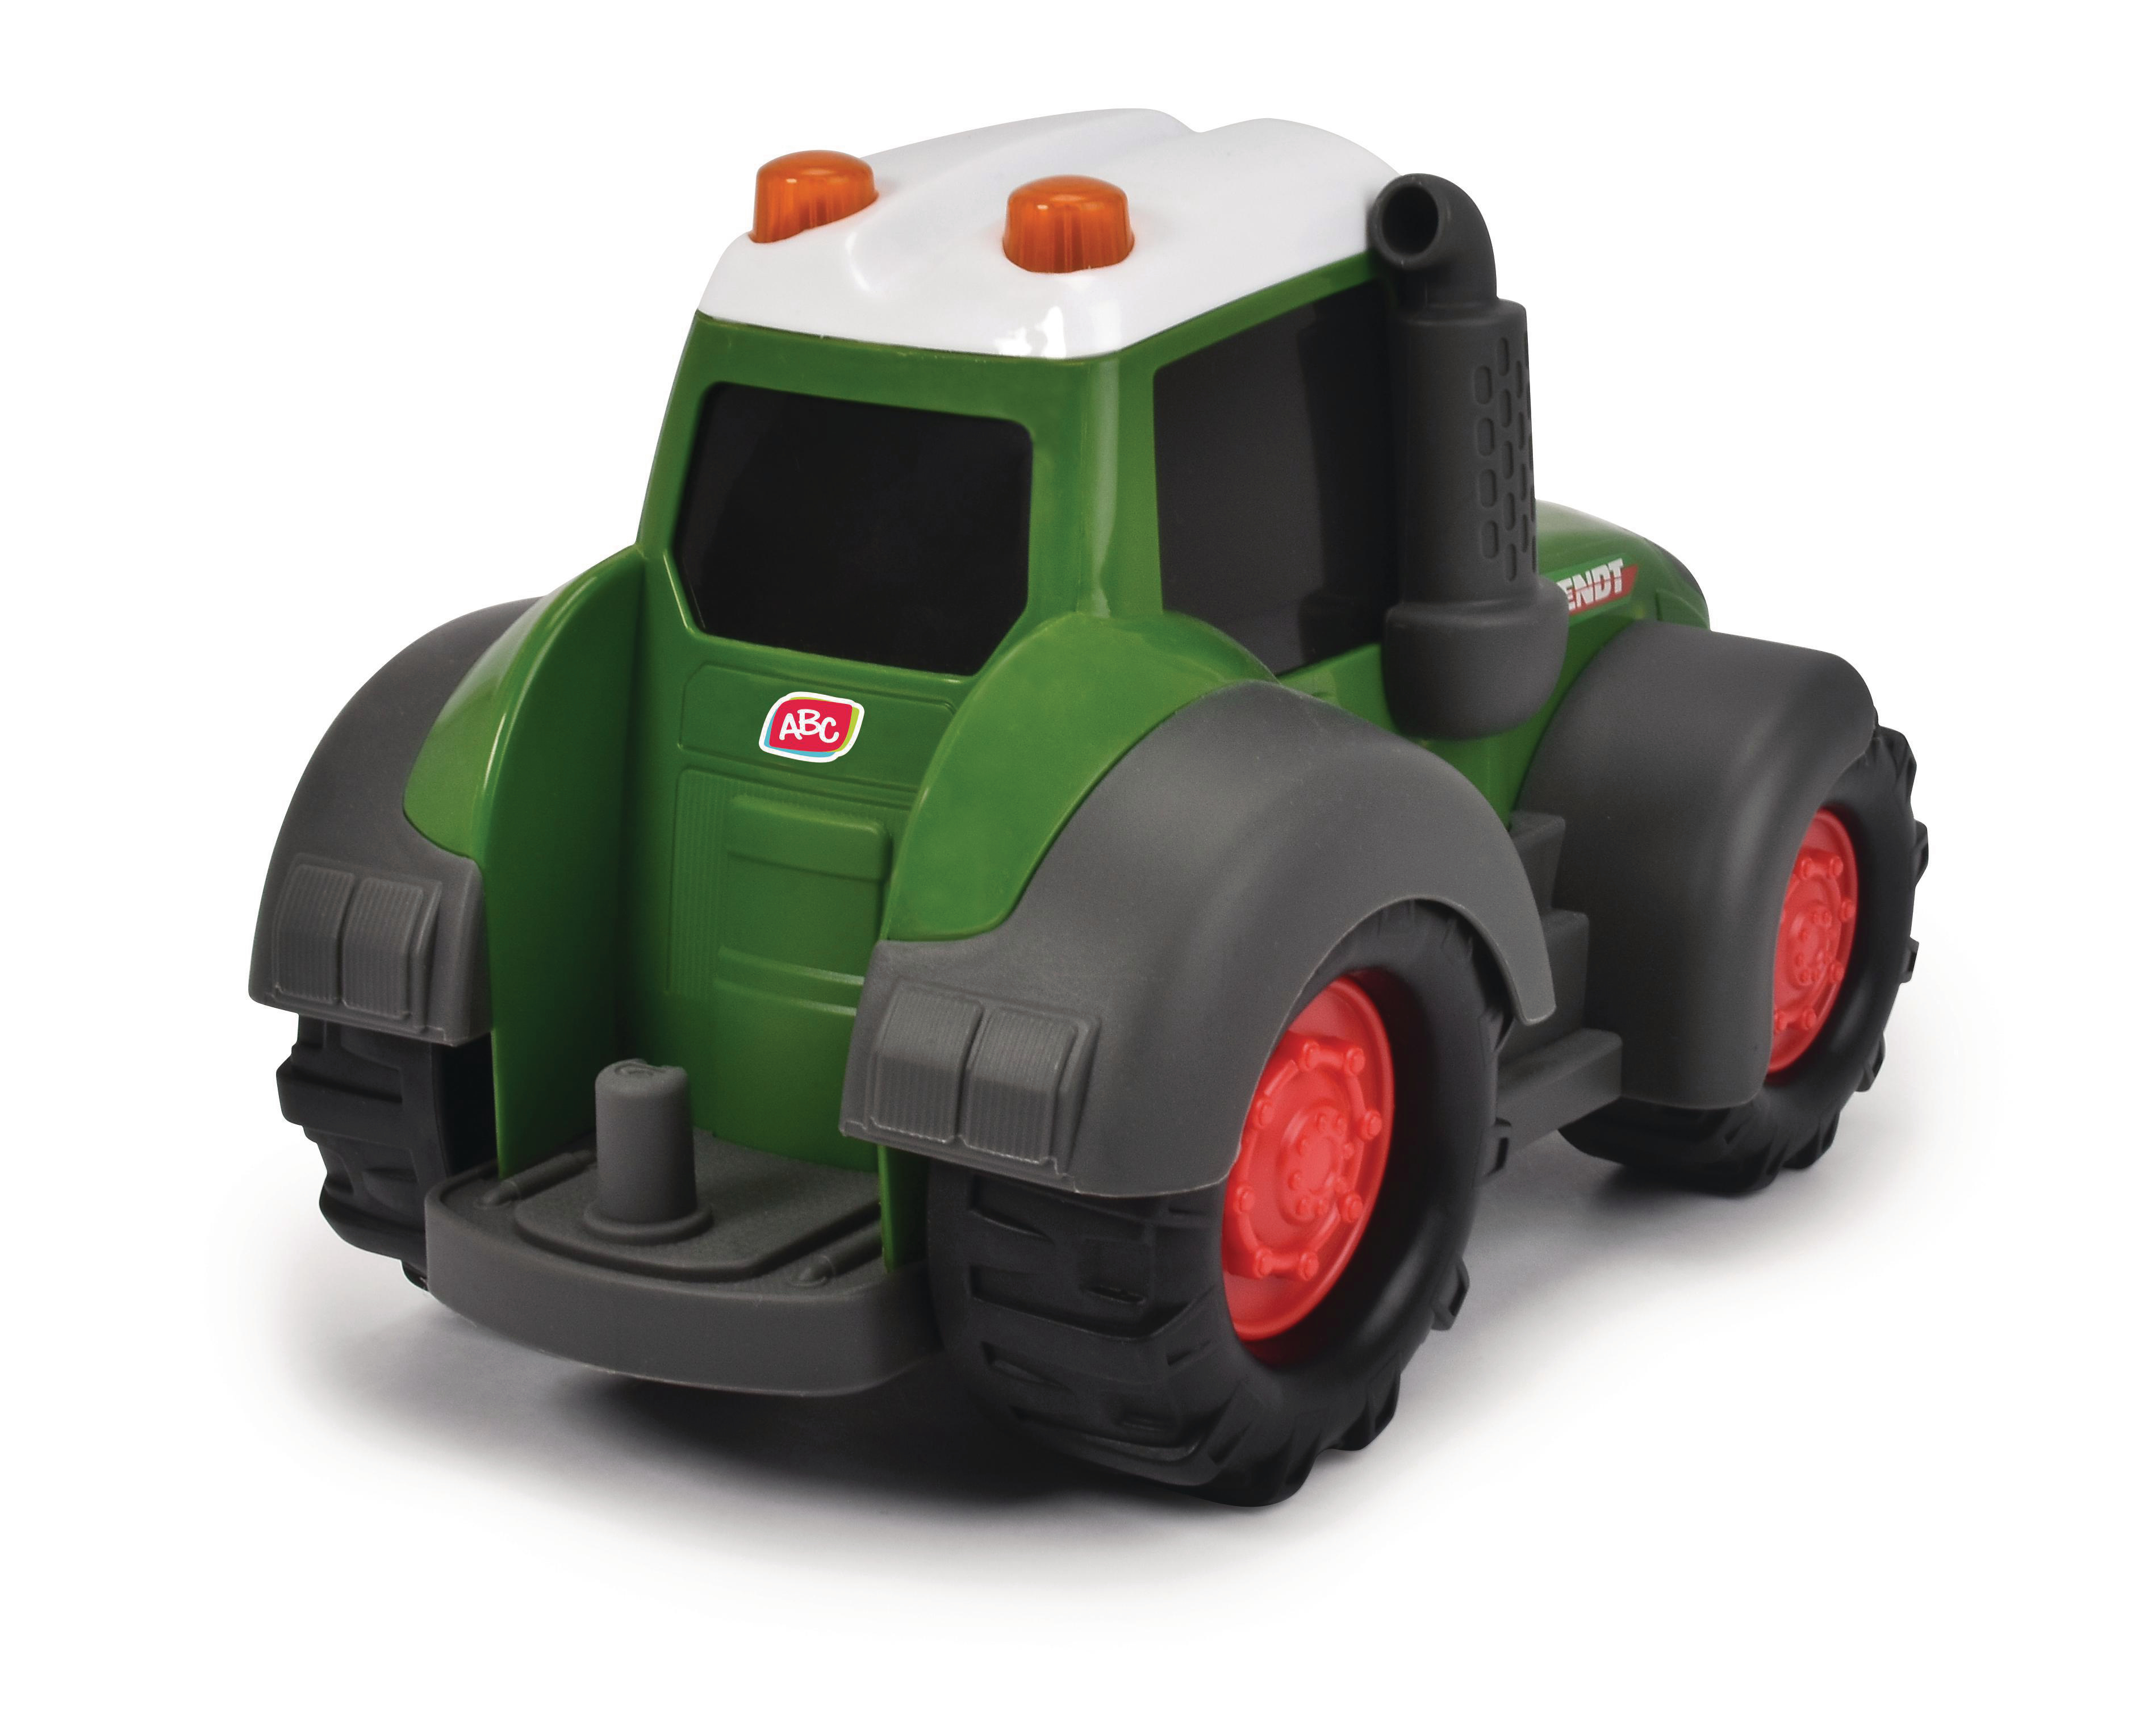 DICKIE-TOYS ABC Fendti Traktor Spielzeugauto Grün